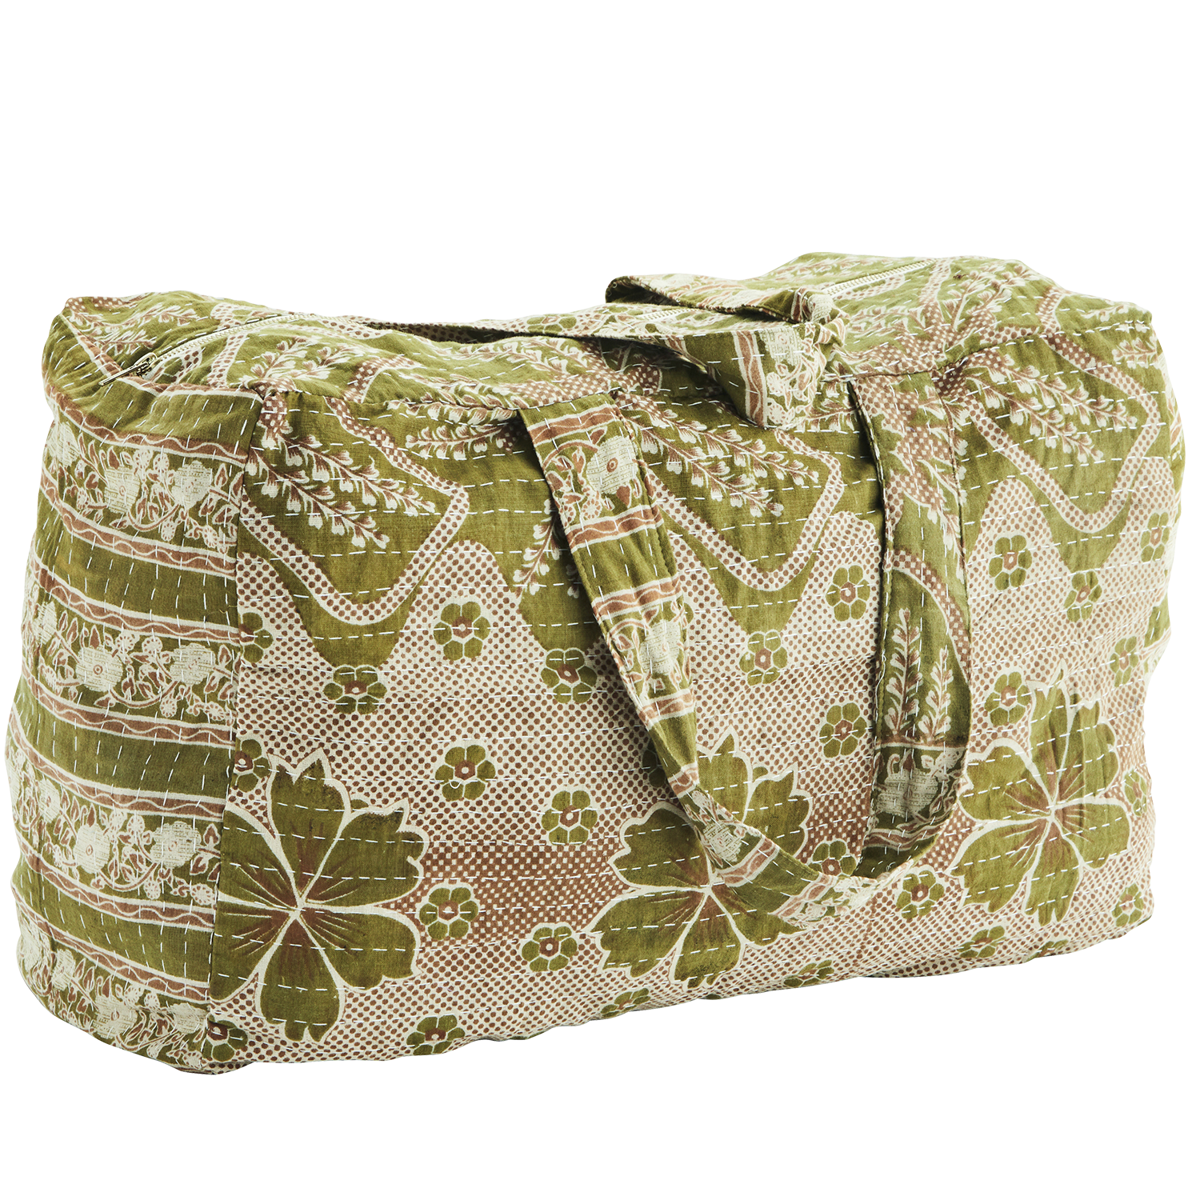 Recycled kantha travel bag